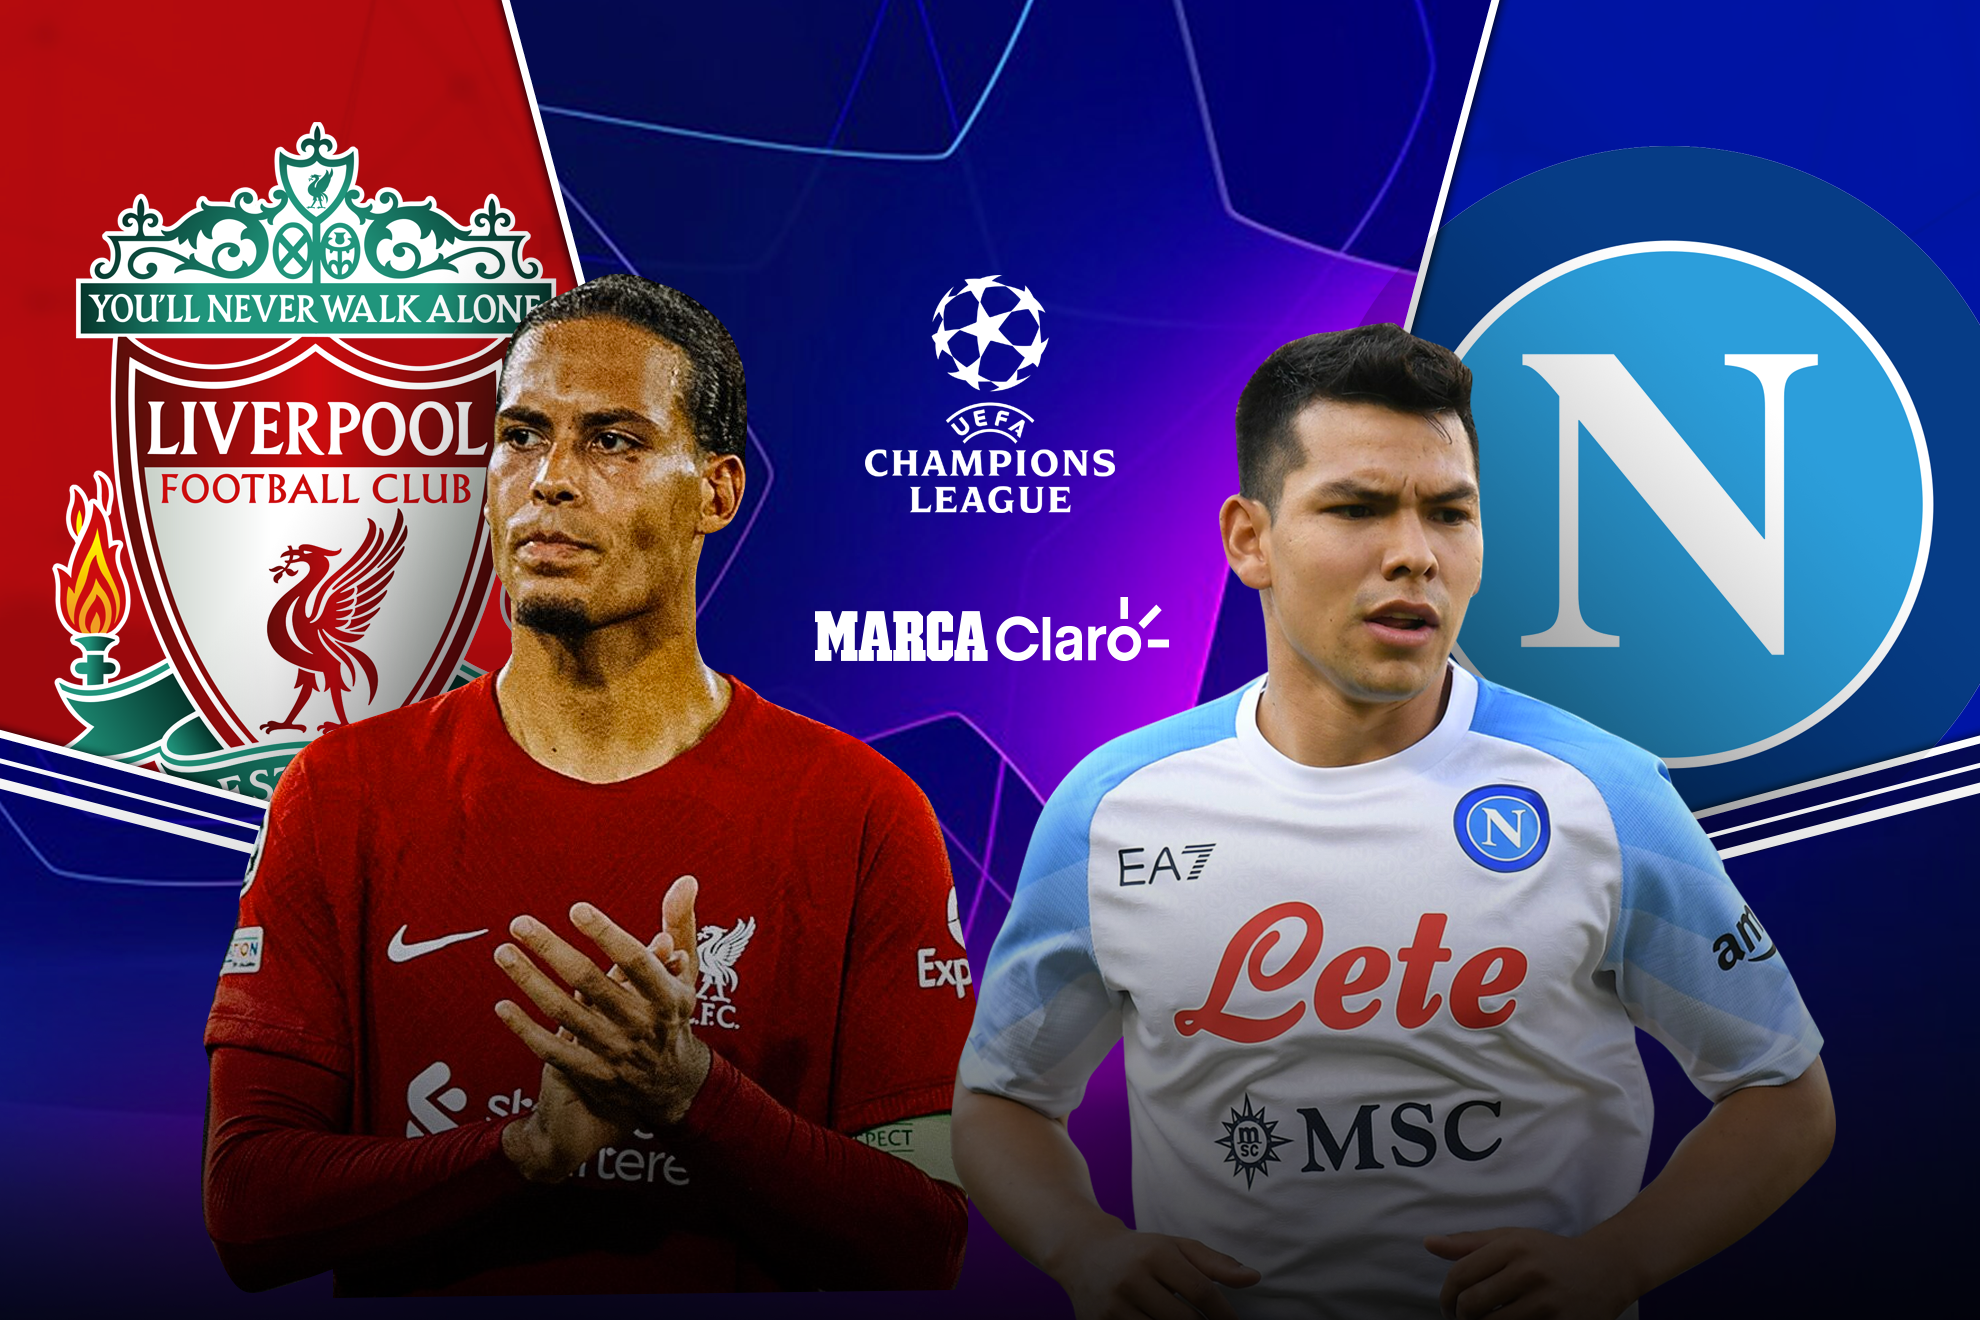 Liverpool vs Napoli, en vivo juego de la jornada 6 de la Champions League